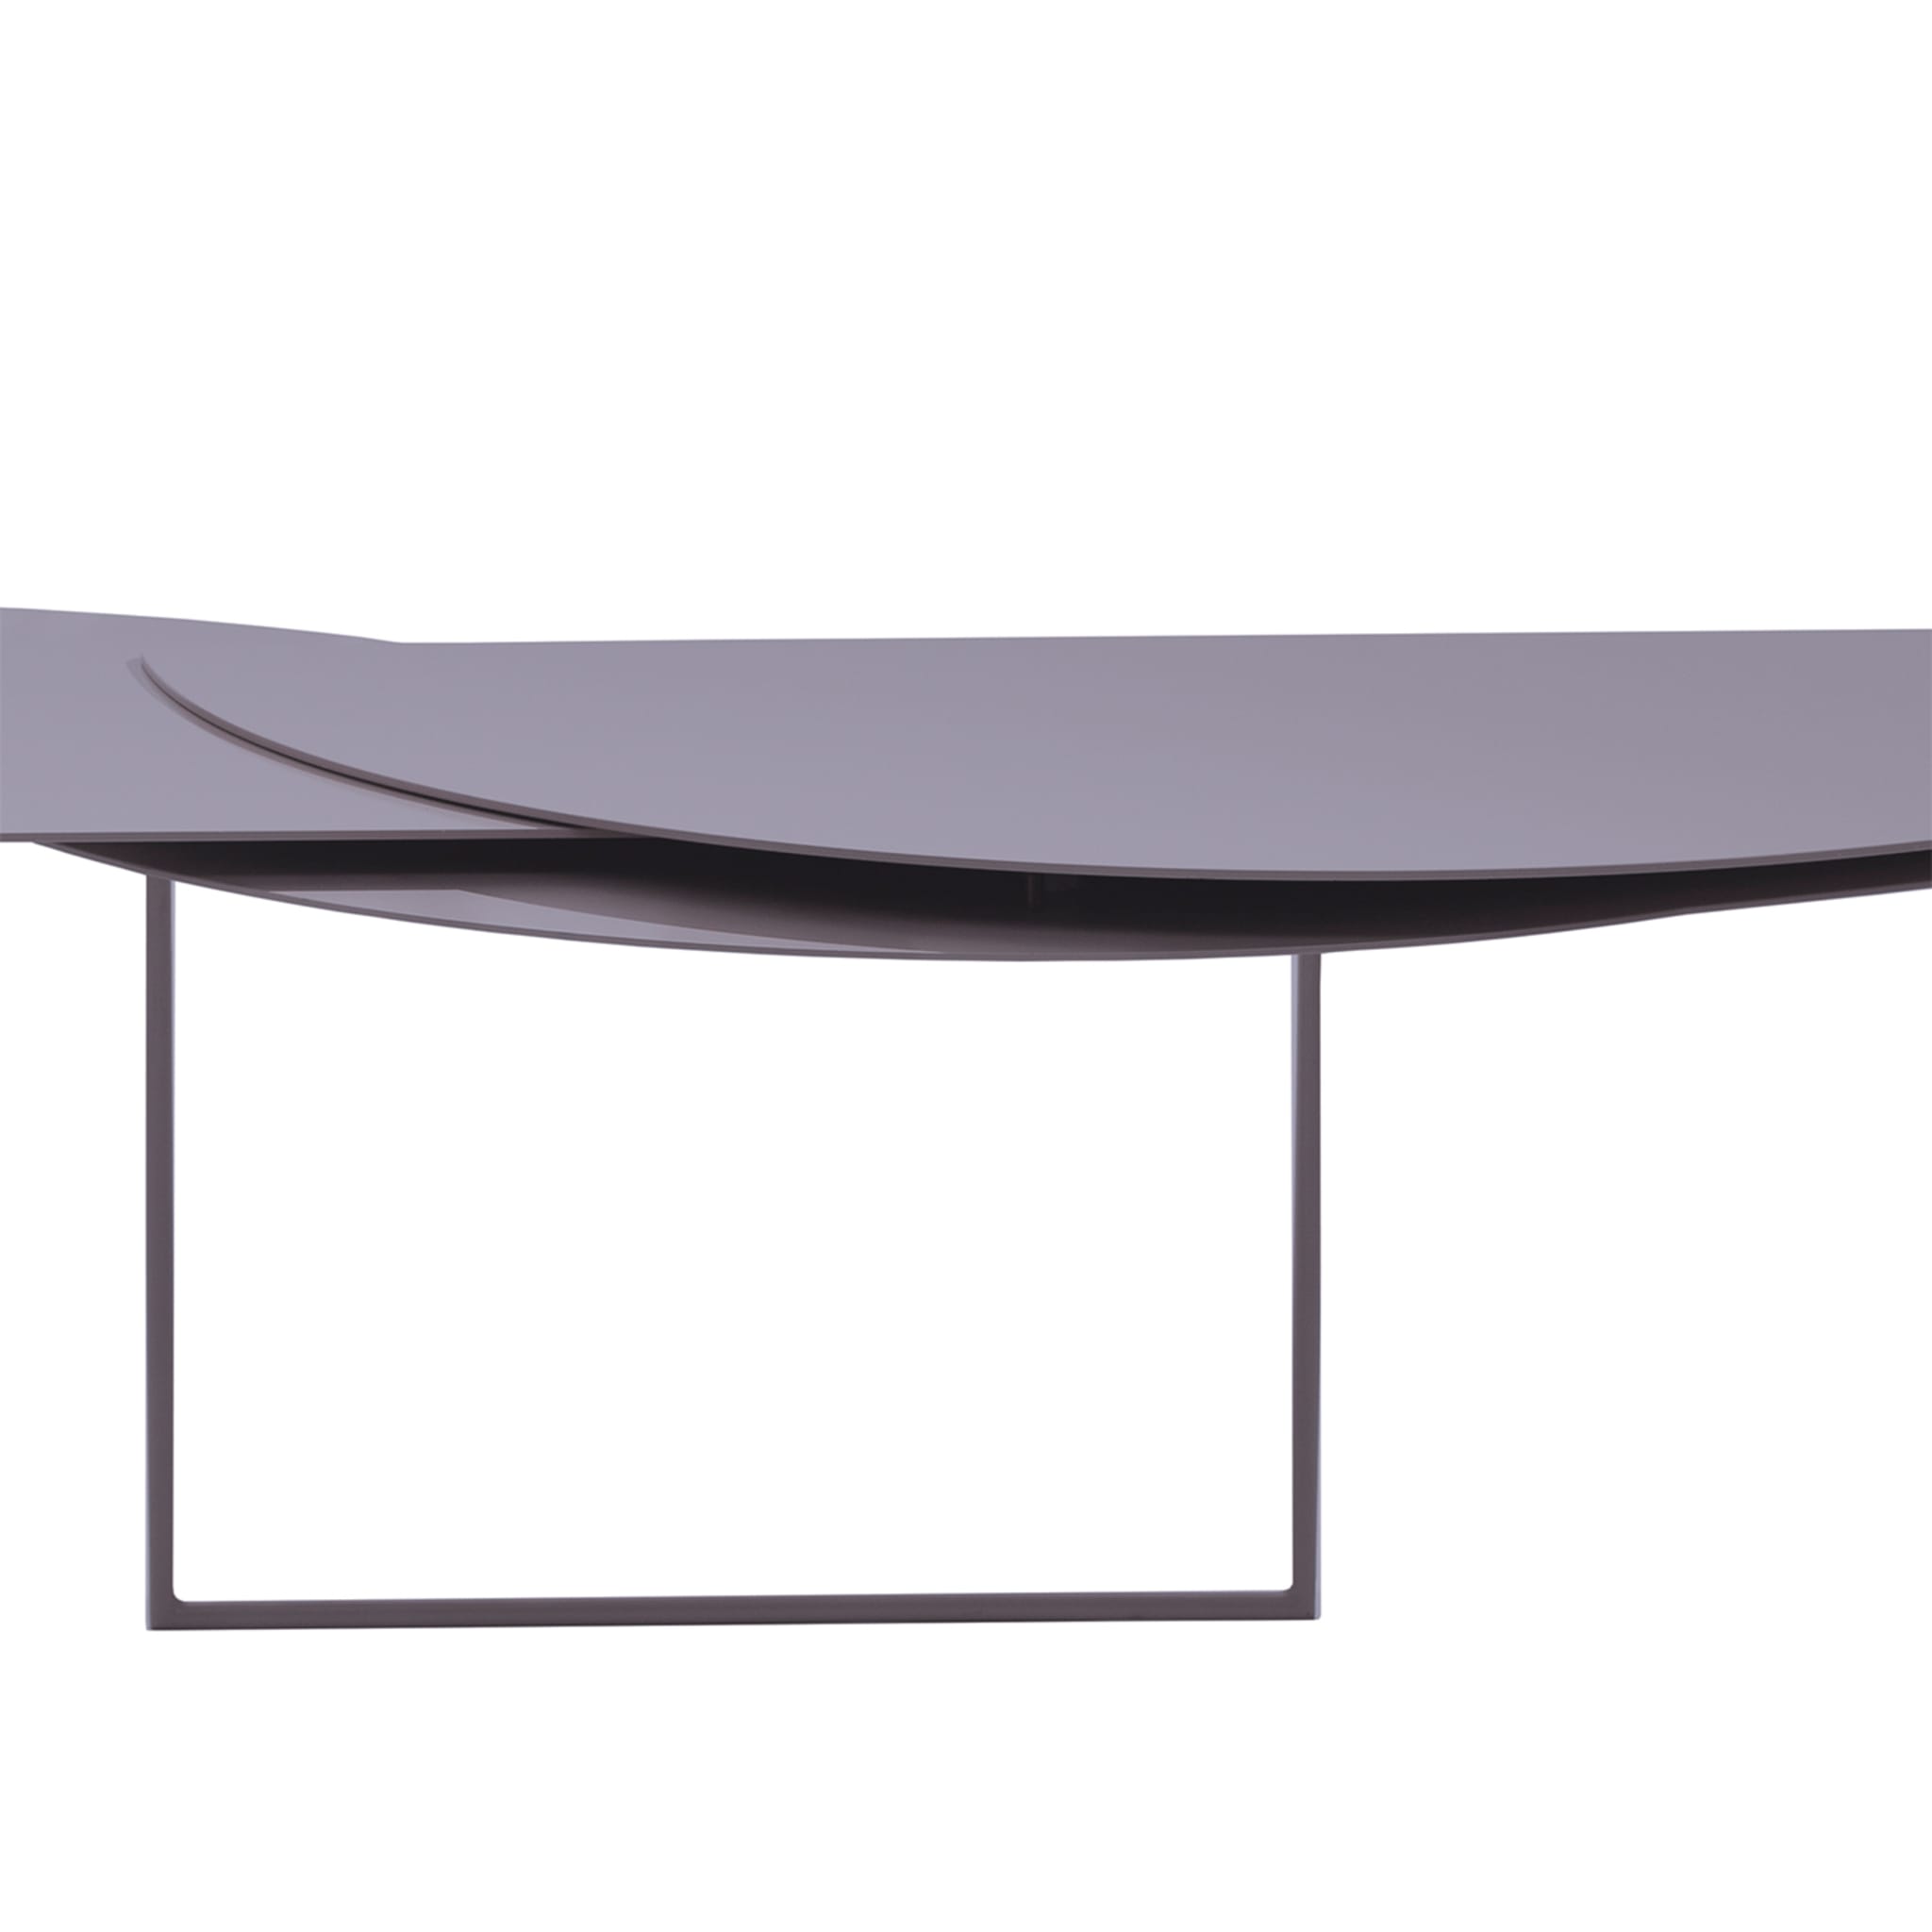 ALHENA side table #1 by Kathrin Charlotte Bohr - Alternative view 3